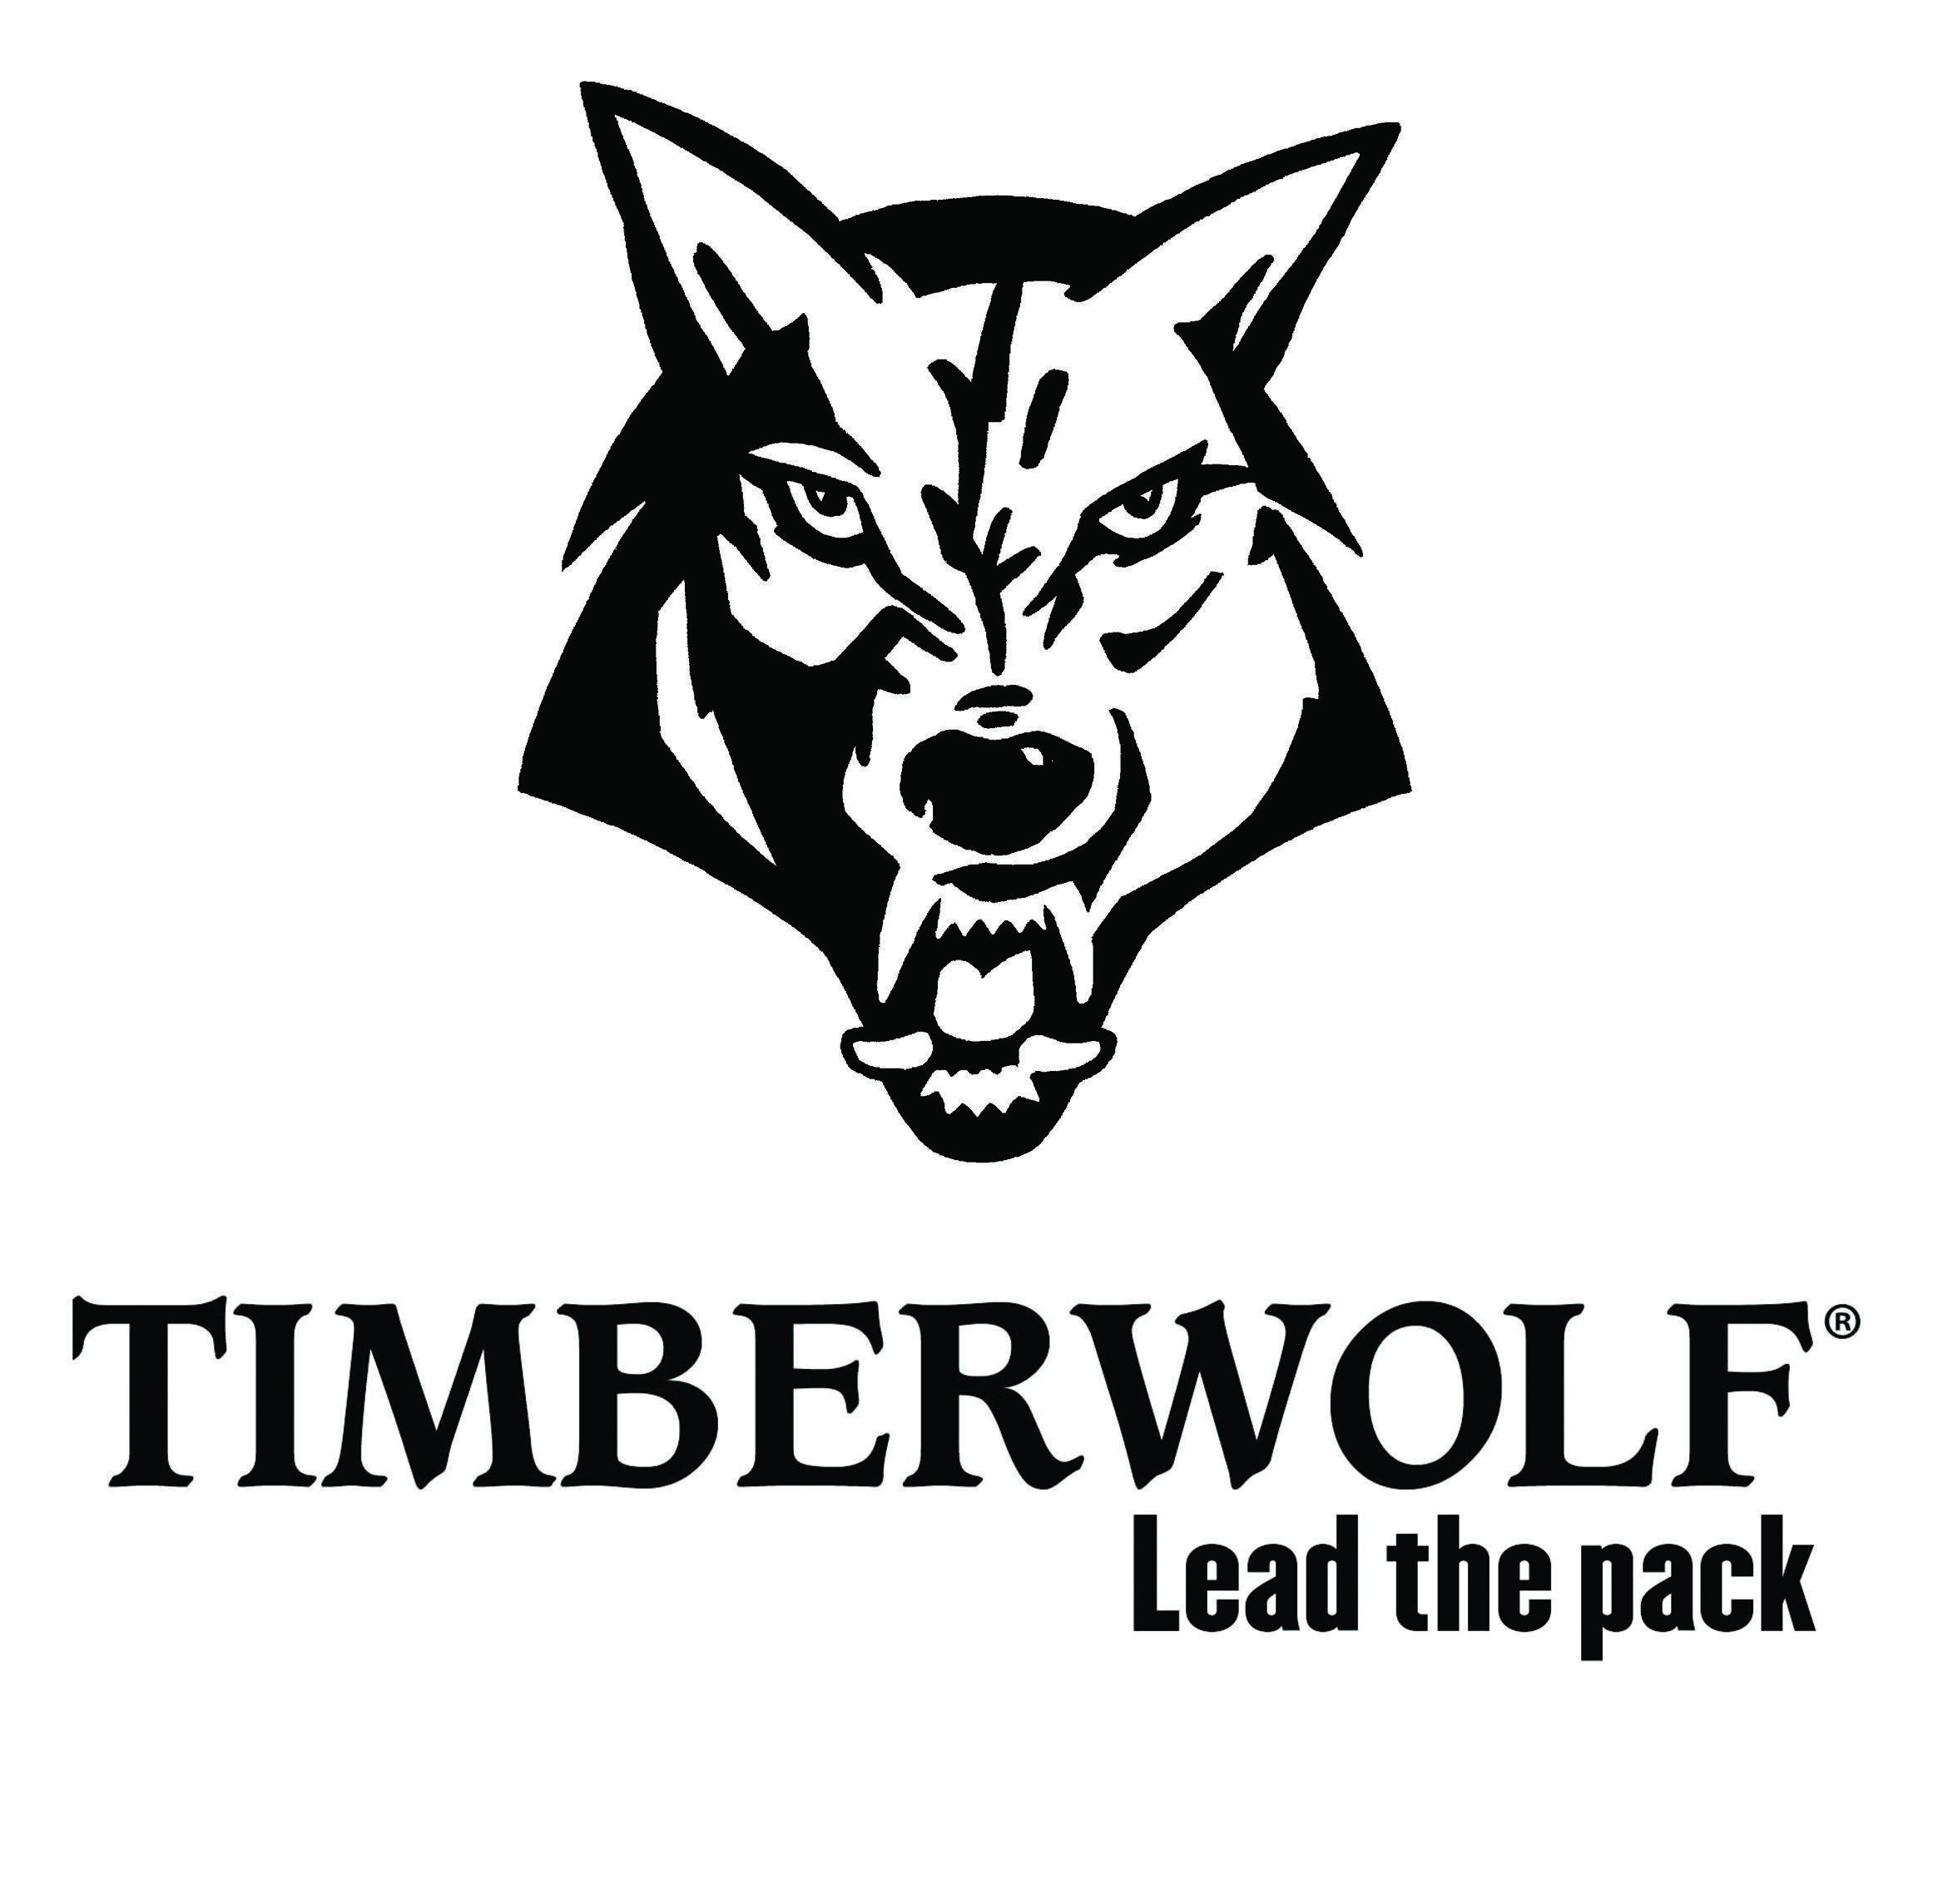 Timberwolf Logo - Timberwolf Professional Wood Chippers & Wood Shredders